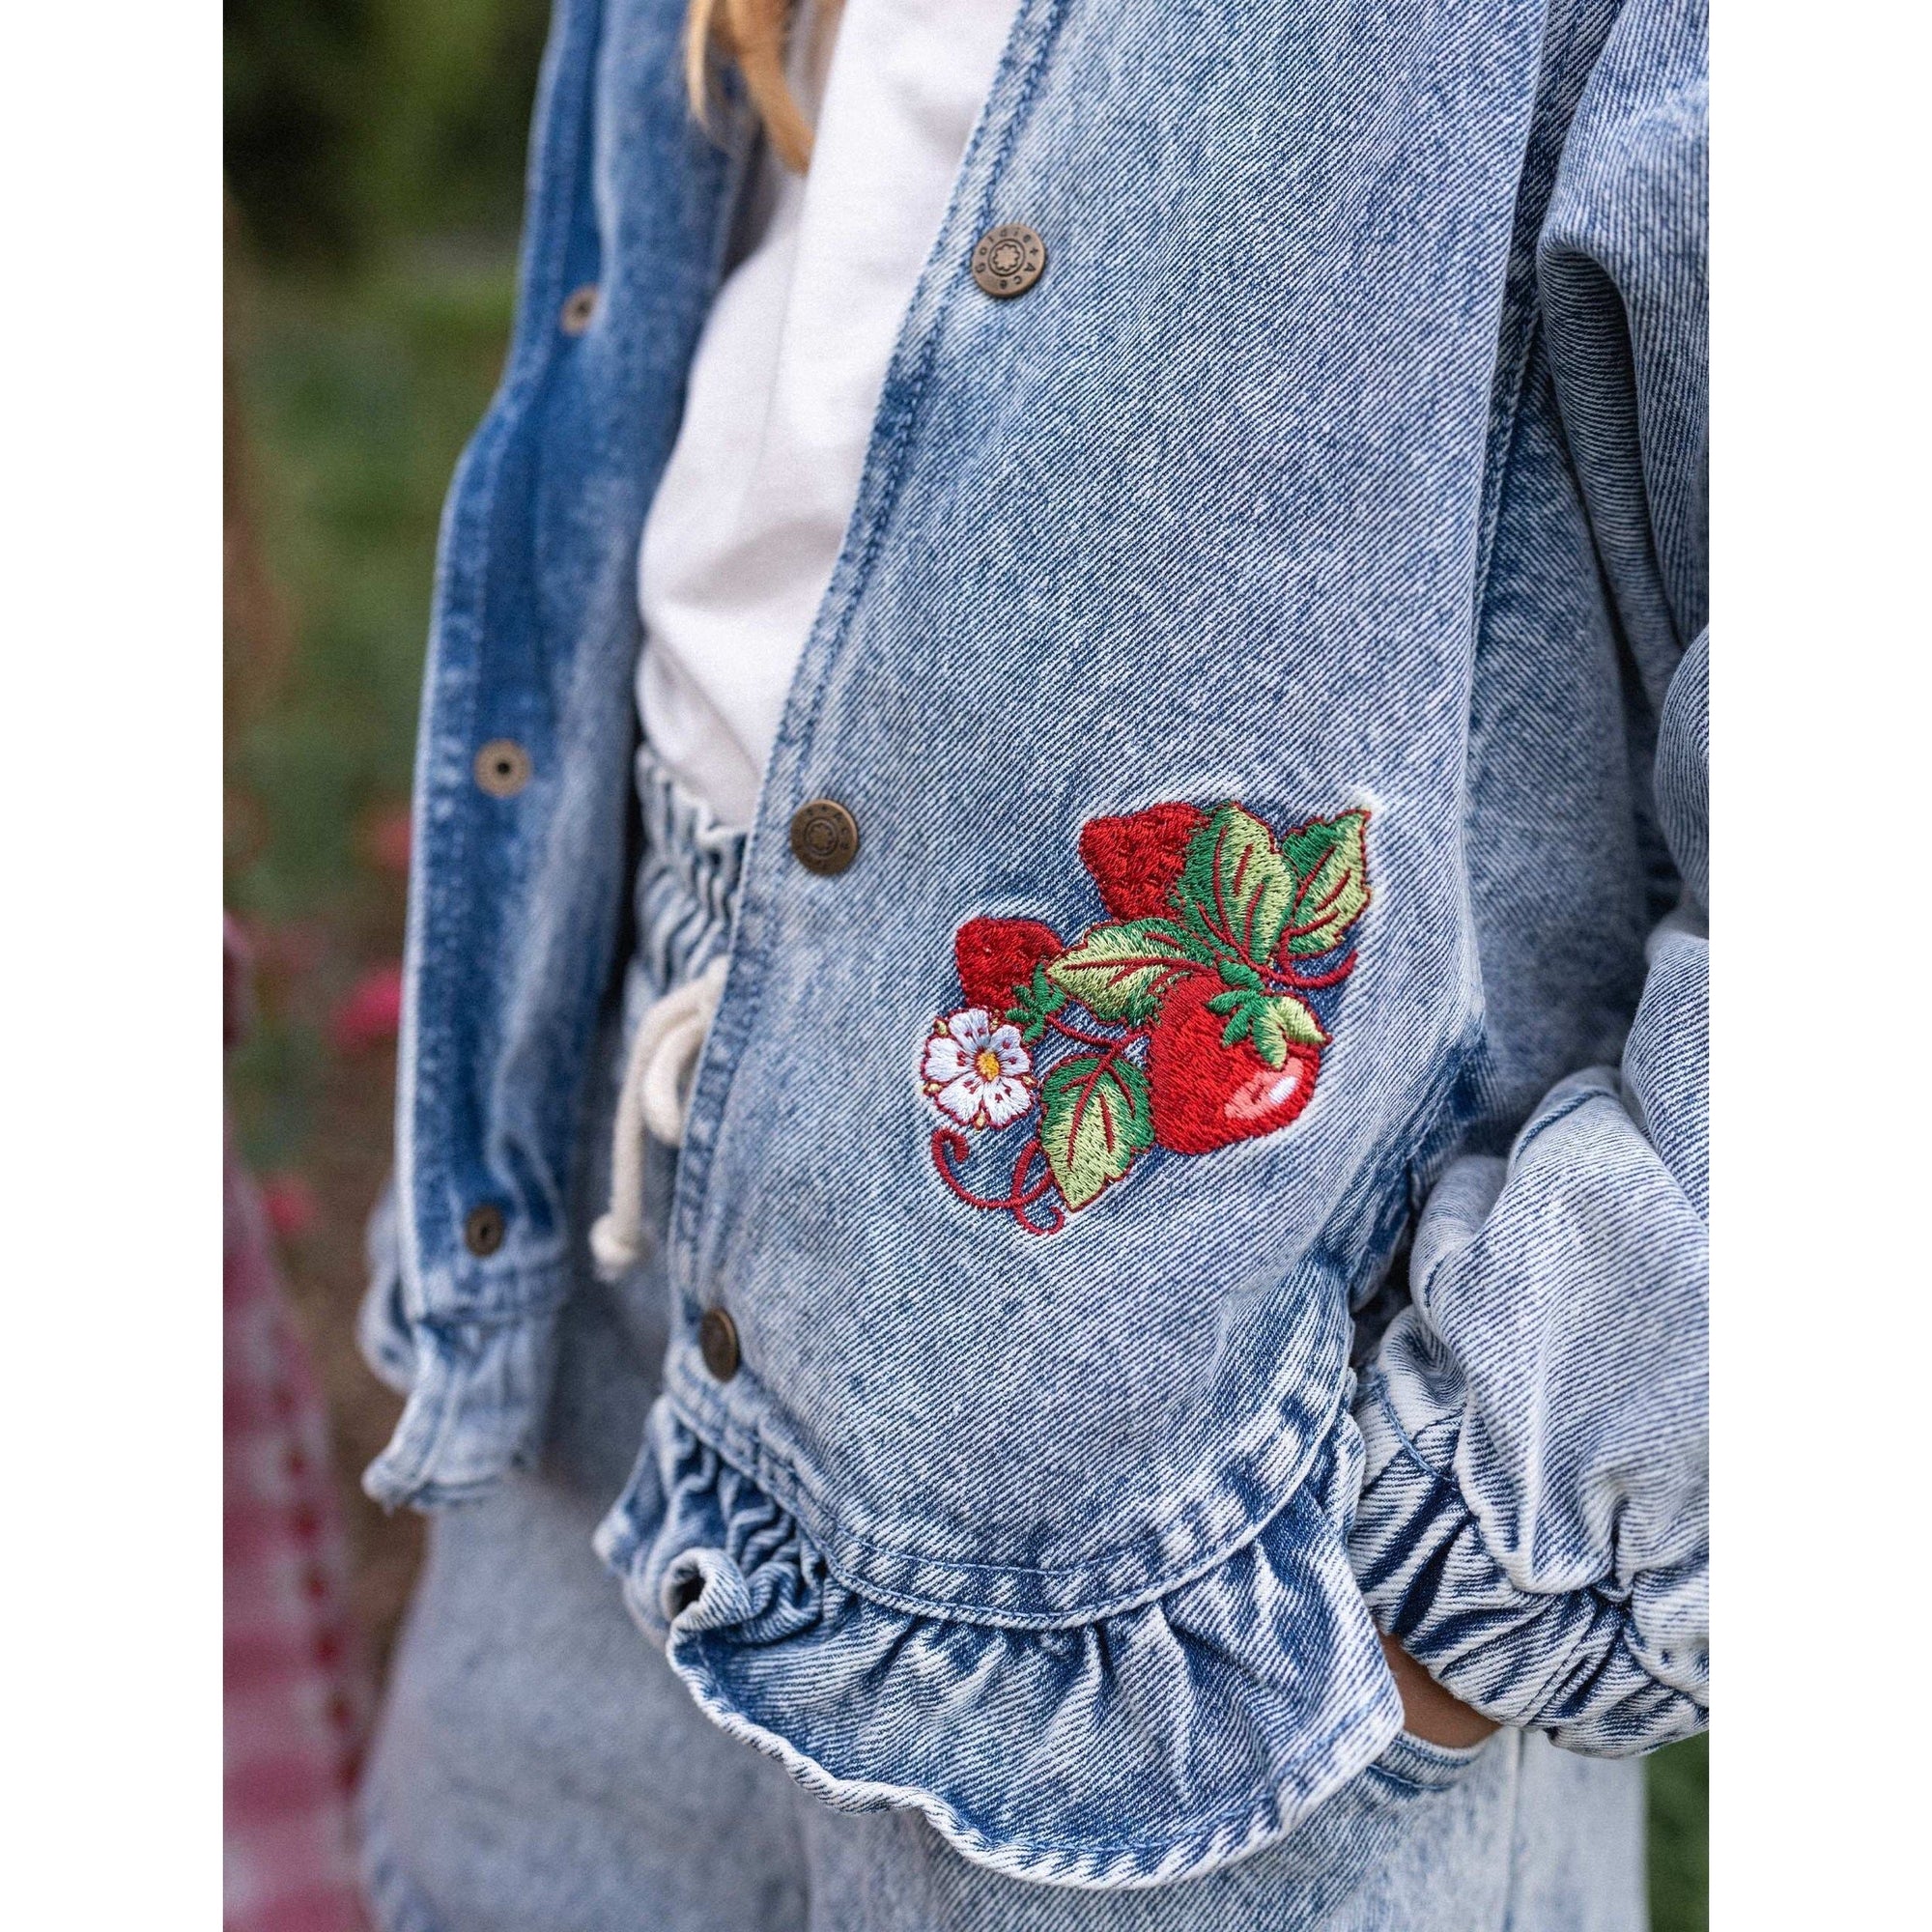 Sarah Strawberry Vintage Denim Jacket